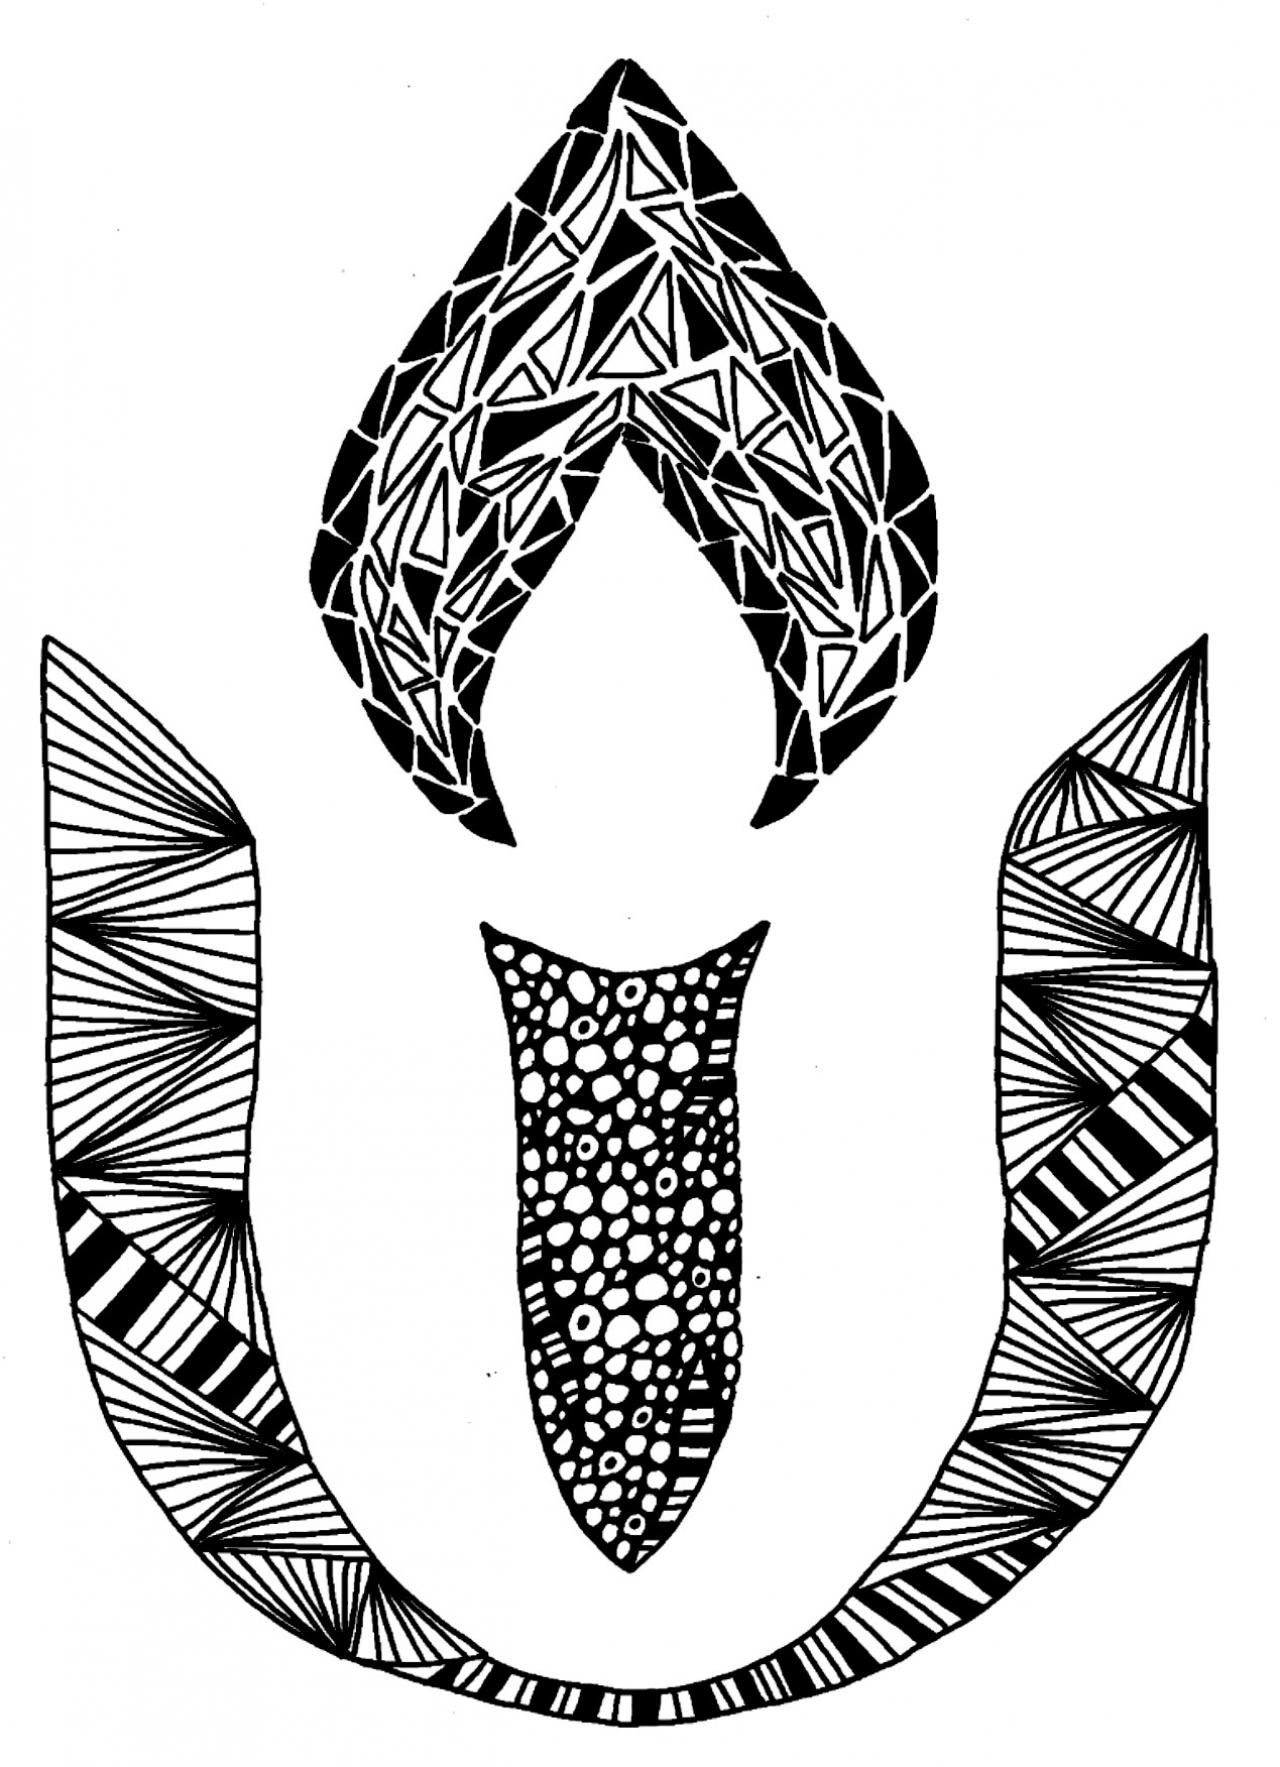 Unitarian universalist doodle.